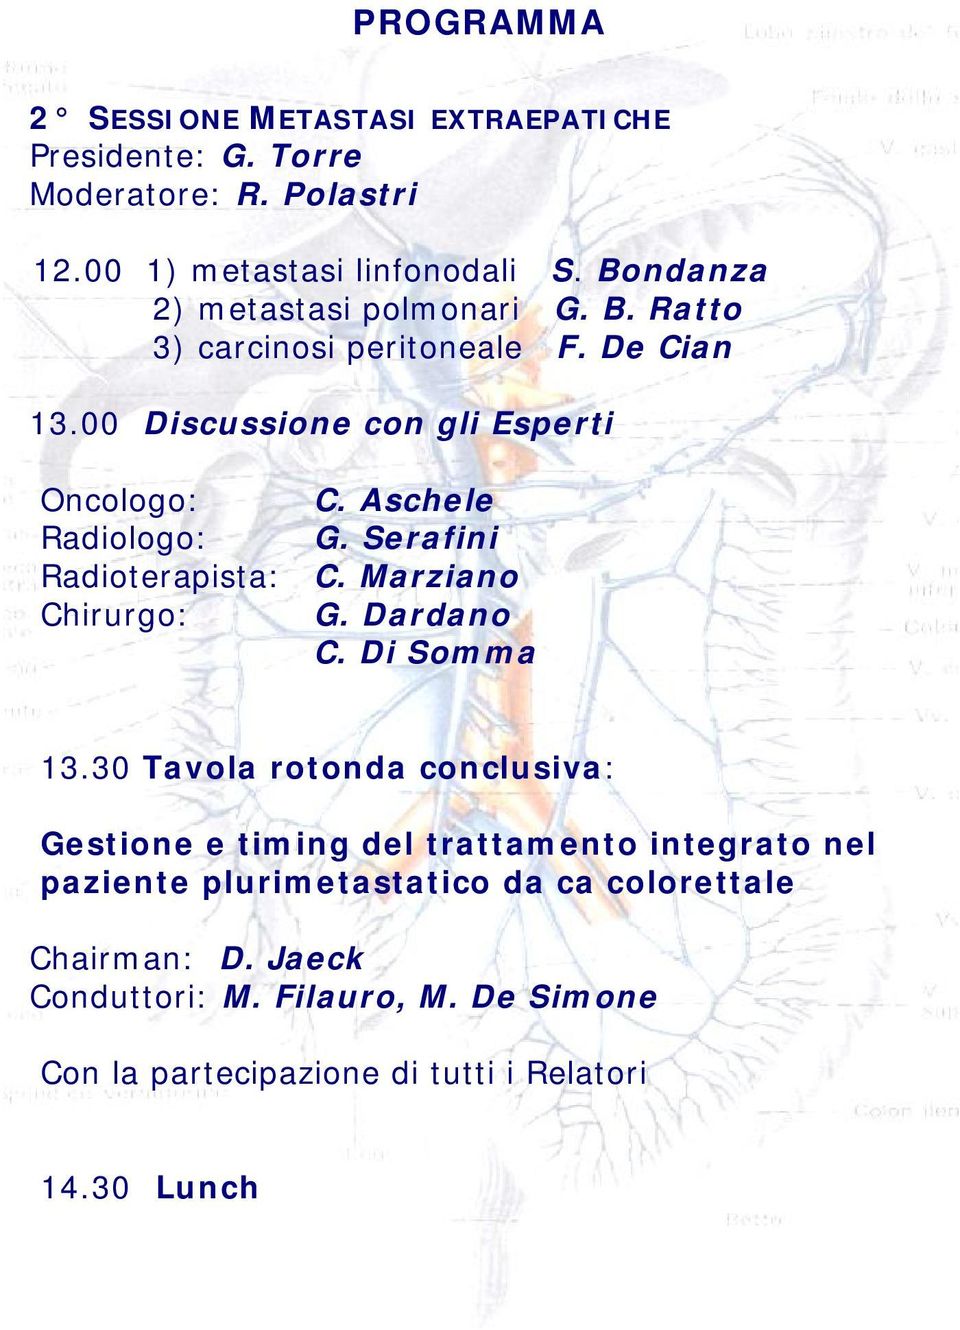 Aschele Radiologo: G. Serafini Radioterapista: C. Marziano Chirurgo: G. Dardano C. Di Somma 13.